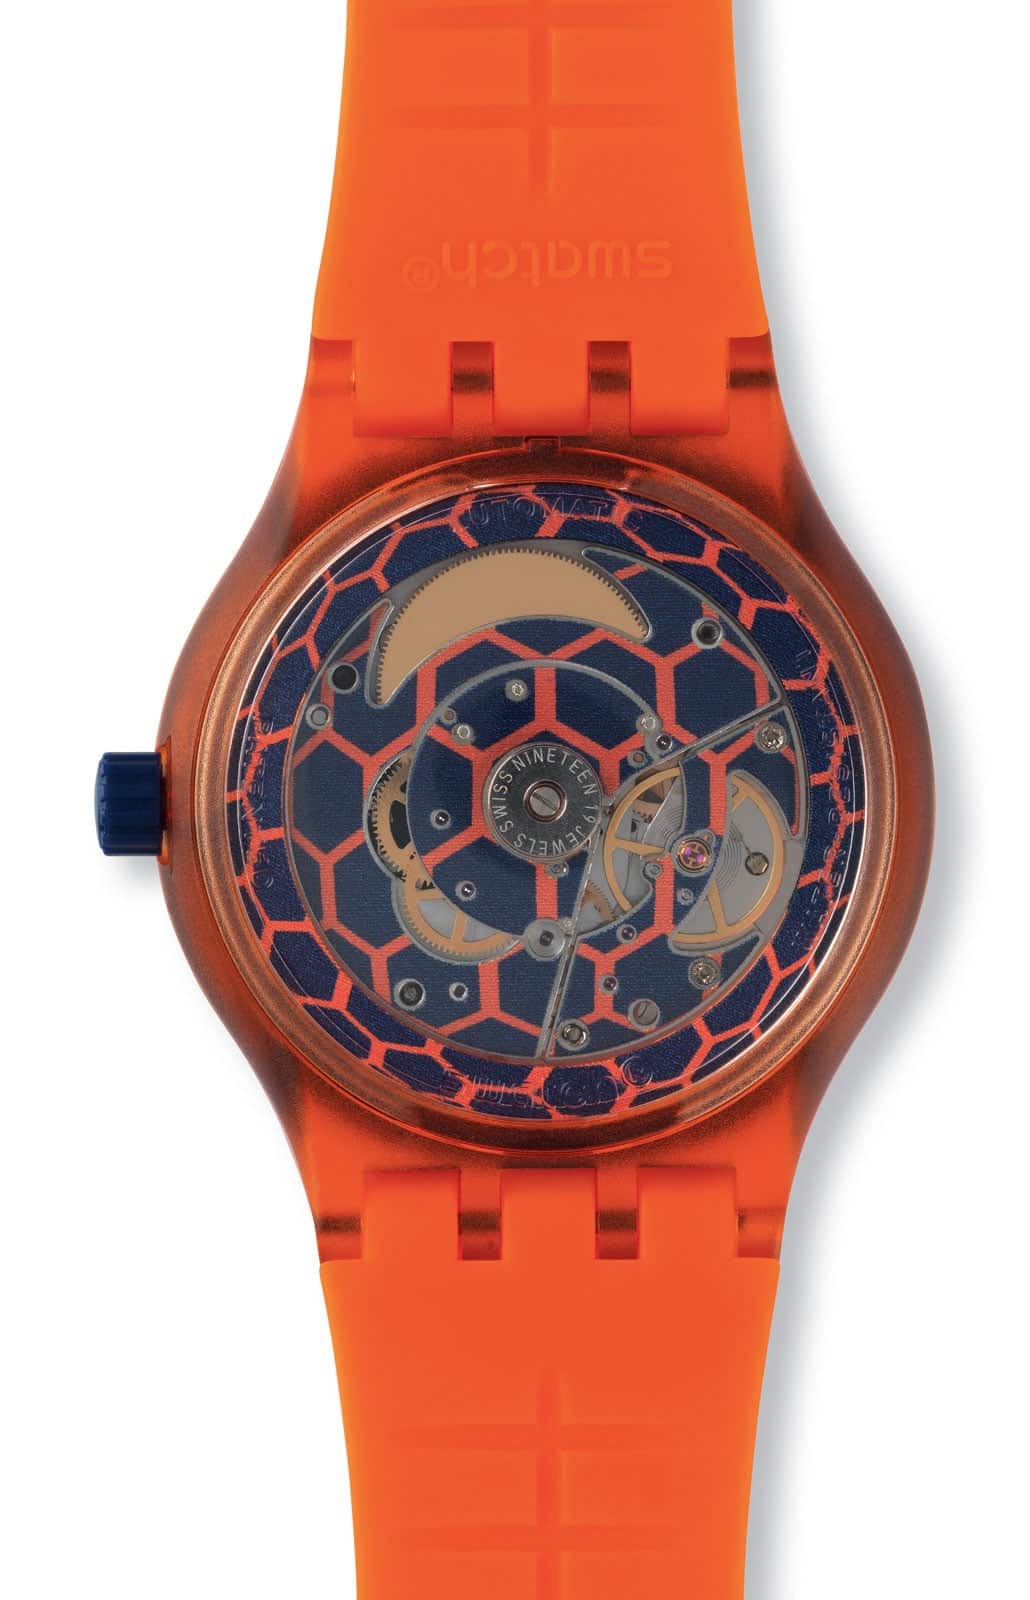 Часы swatch магазин. Наручные часы Swatch lo110. Наручные часы Swatch ge401. Swatch Swiss оранжевые. Наручные часы Swatch subn103.